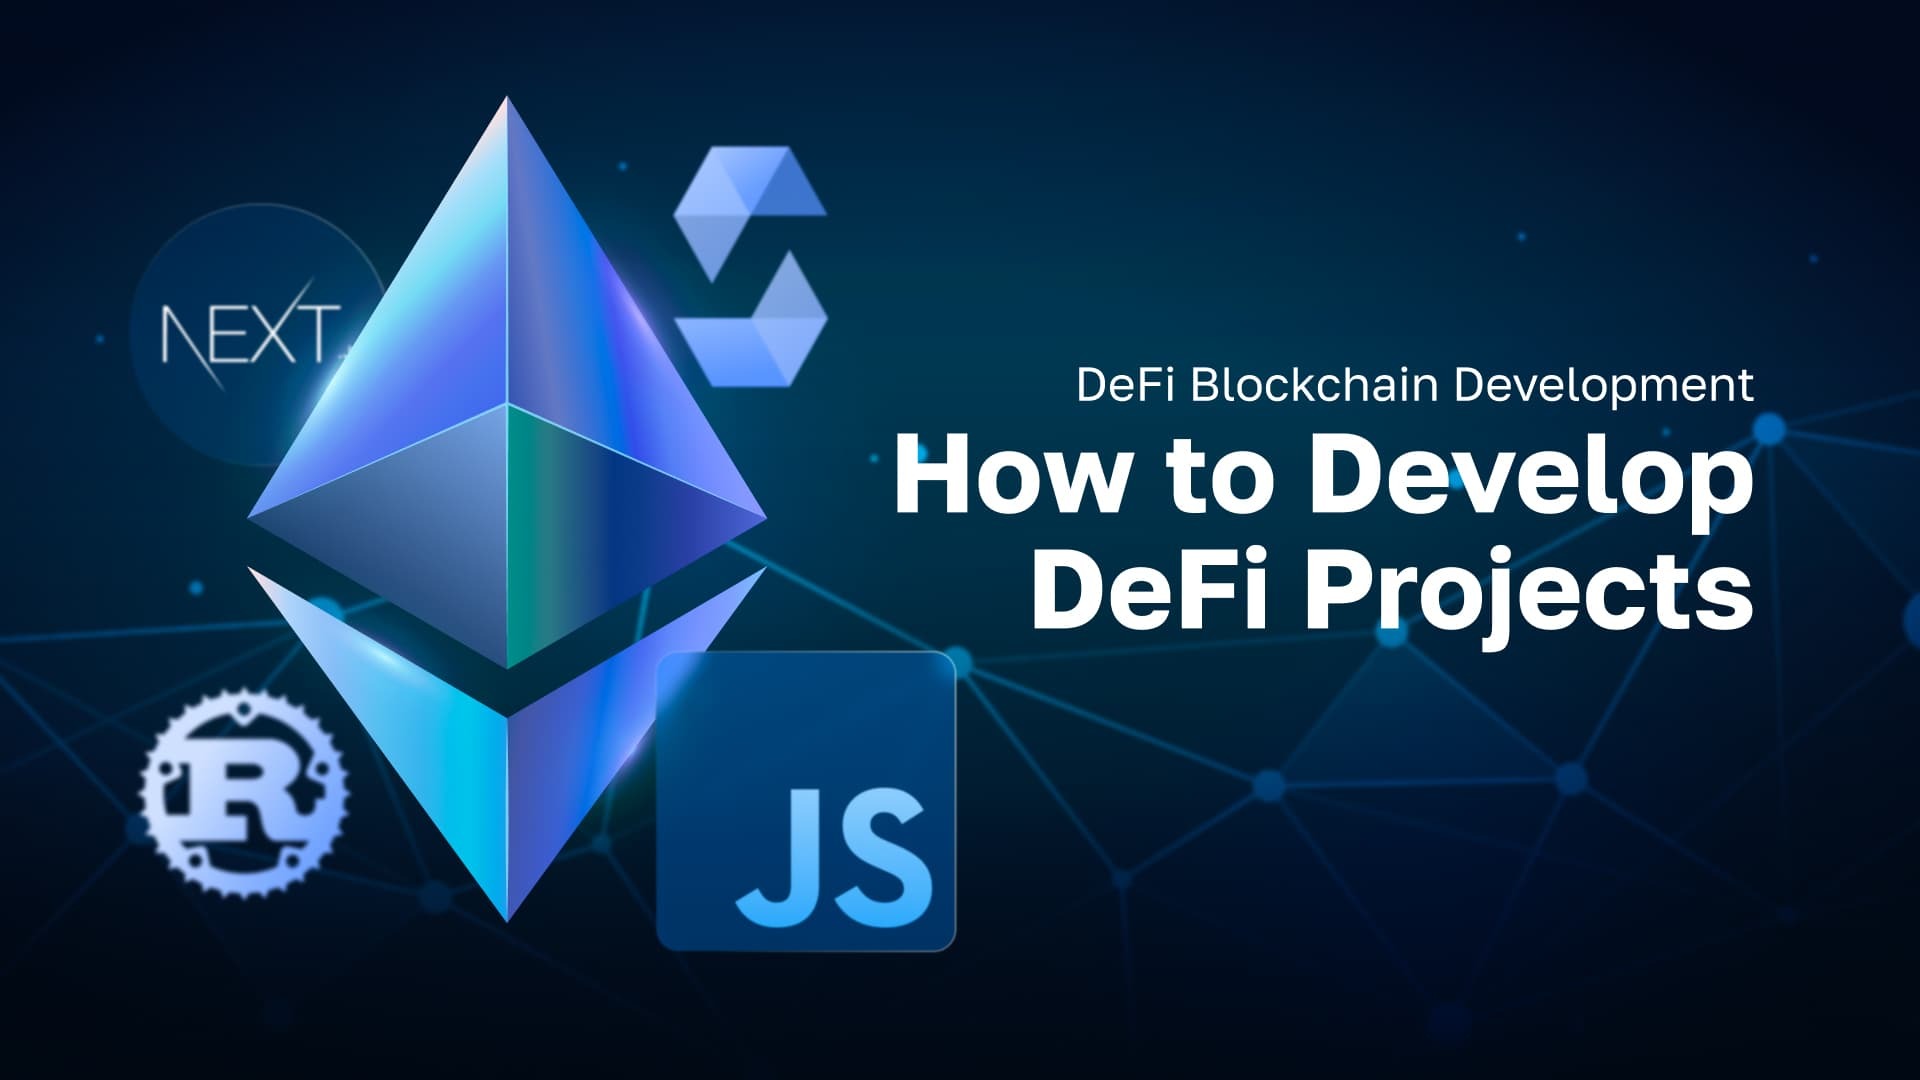 DeFi Blockchain Development - How to Develop DeFi Projects